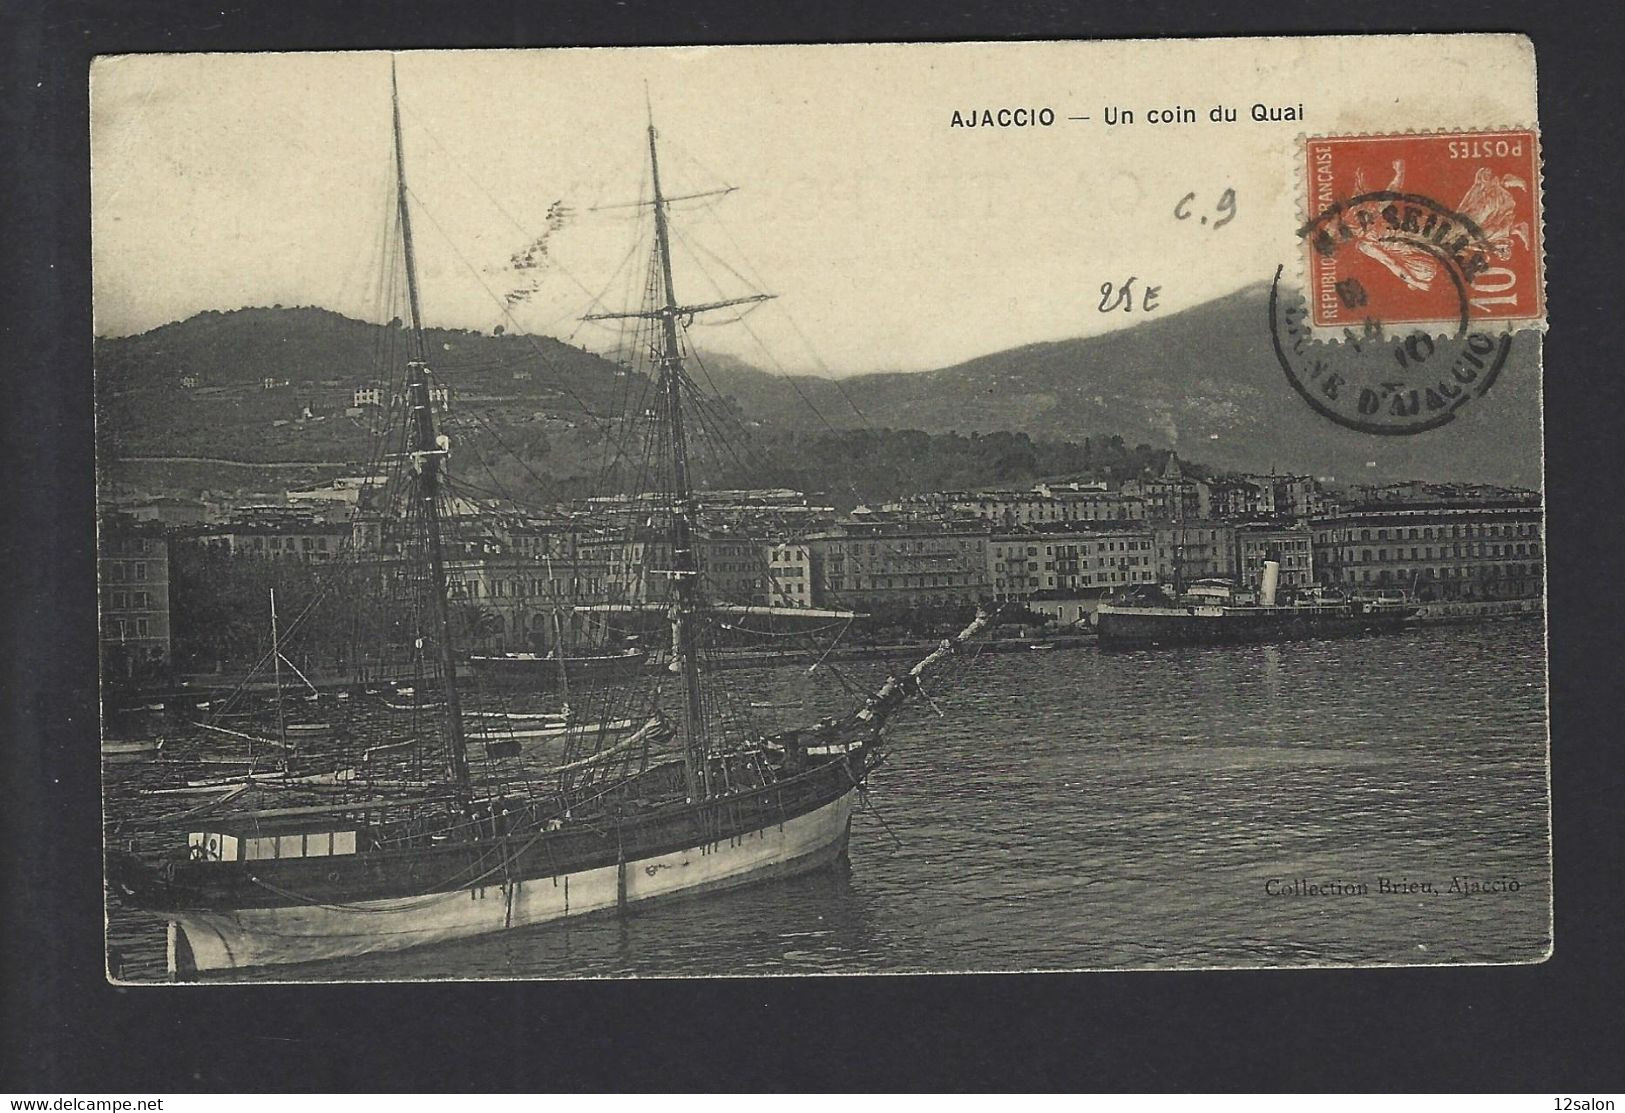 Carte MARSEILLE LIGNE AJACCIO 1910 - Correo Marítimo